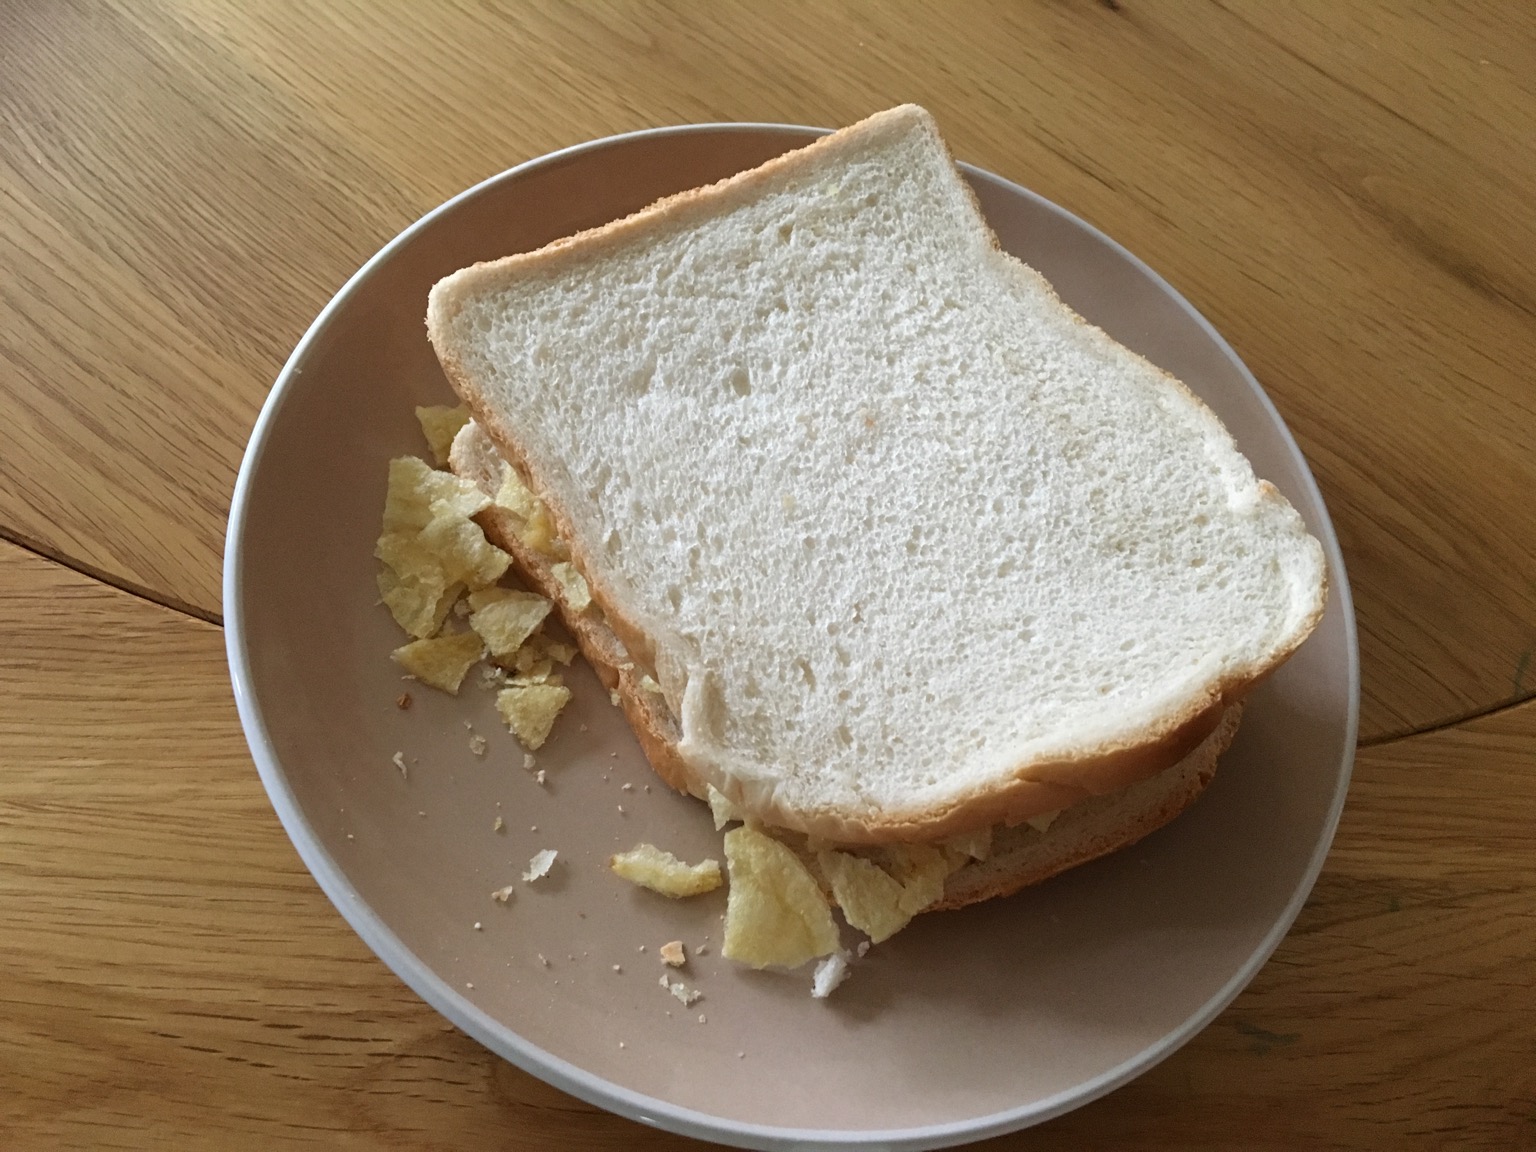 Potato crisps between two slices of white bread